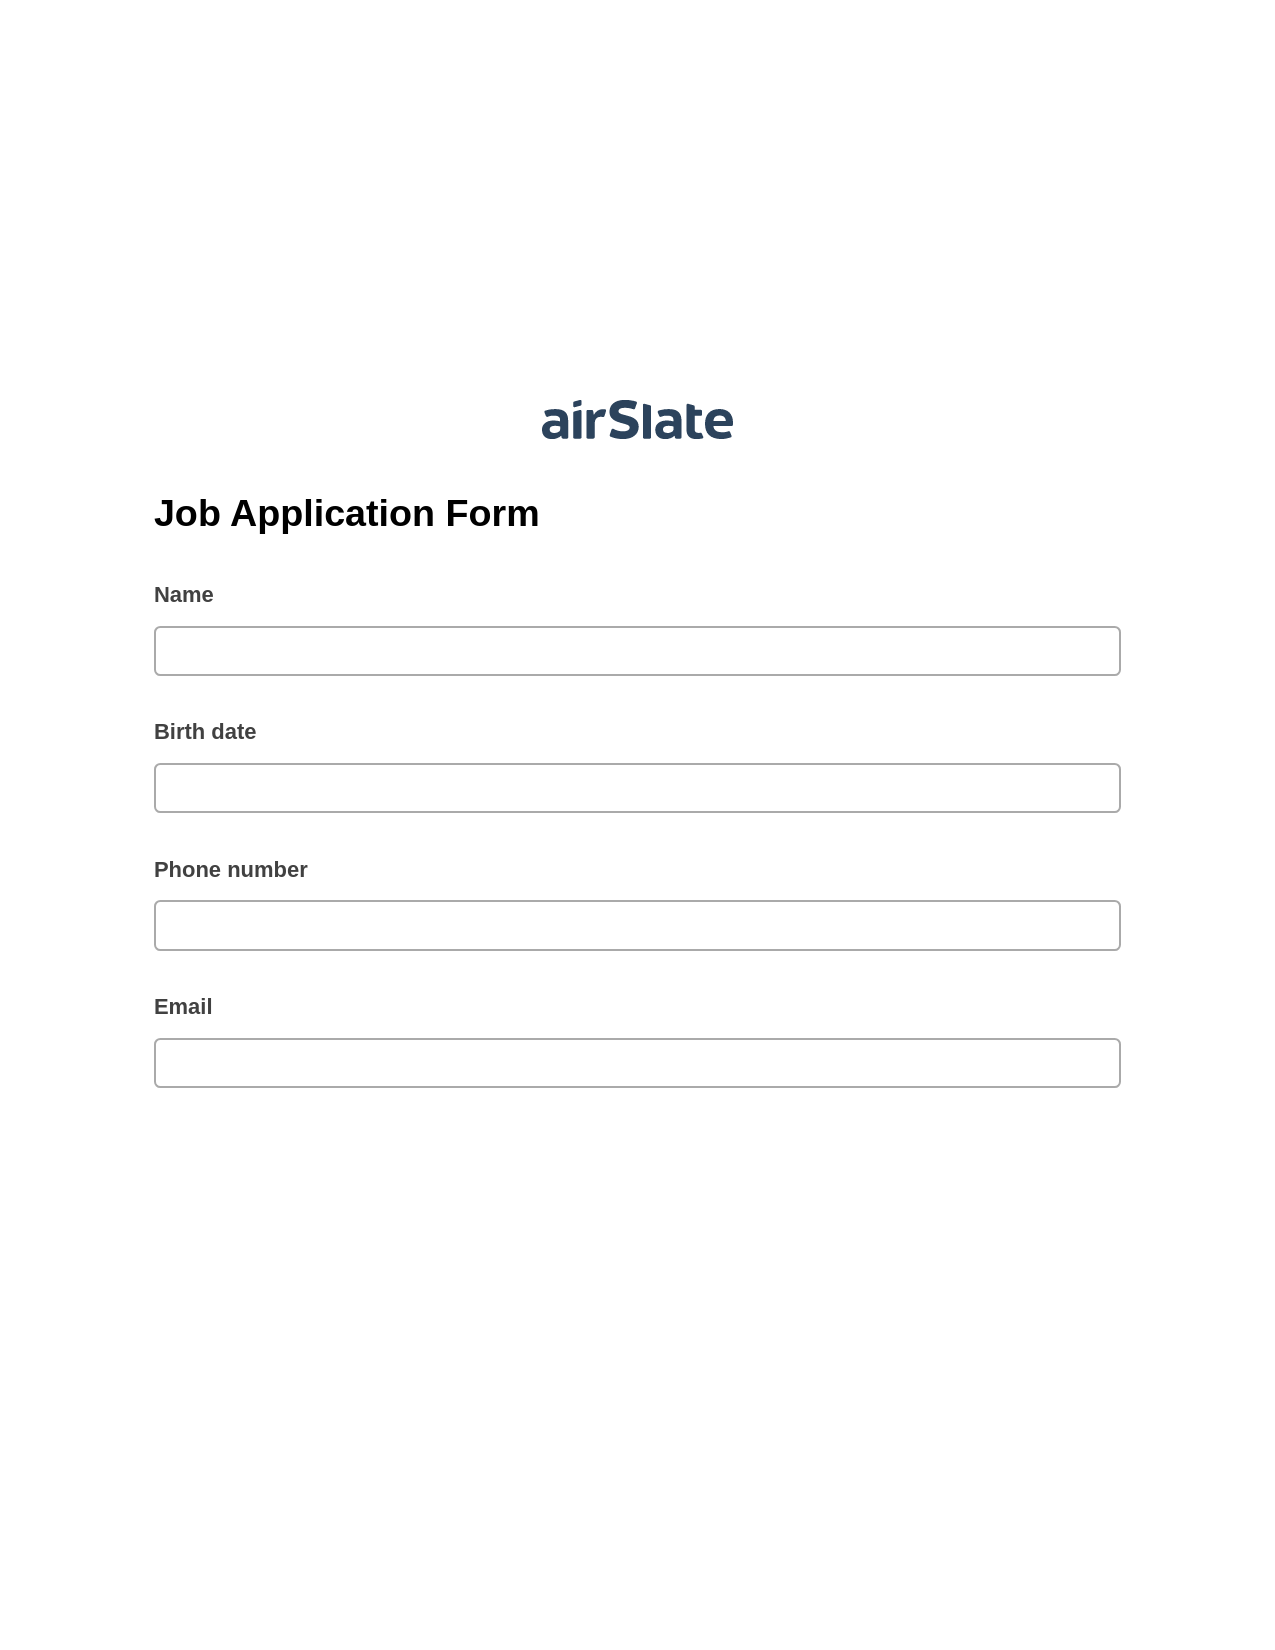 Job Application Form Pre-fill from MySQL Bot, Email Notification Bot, Export to MySQL Bot